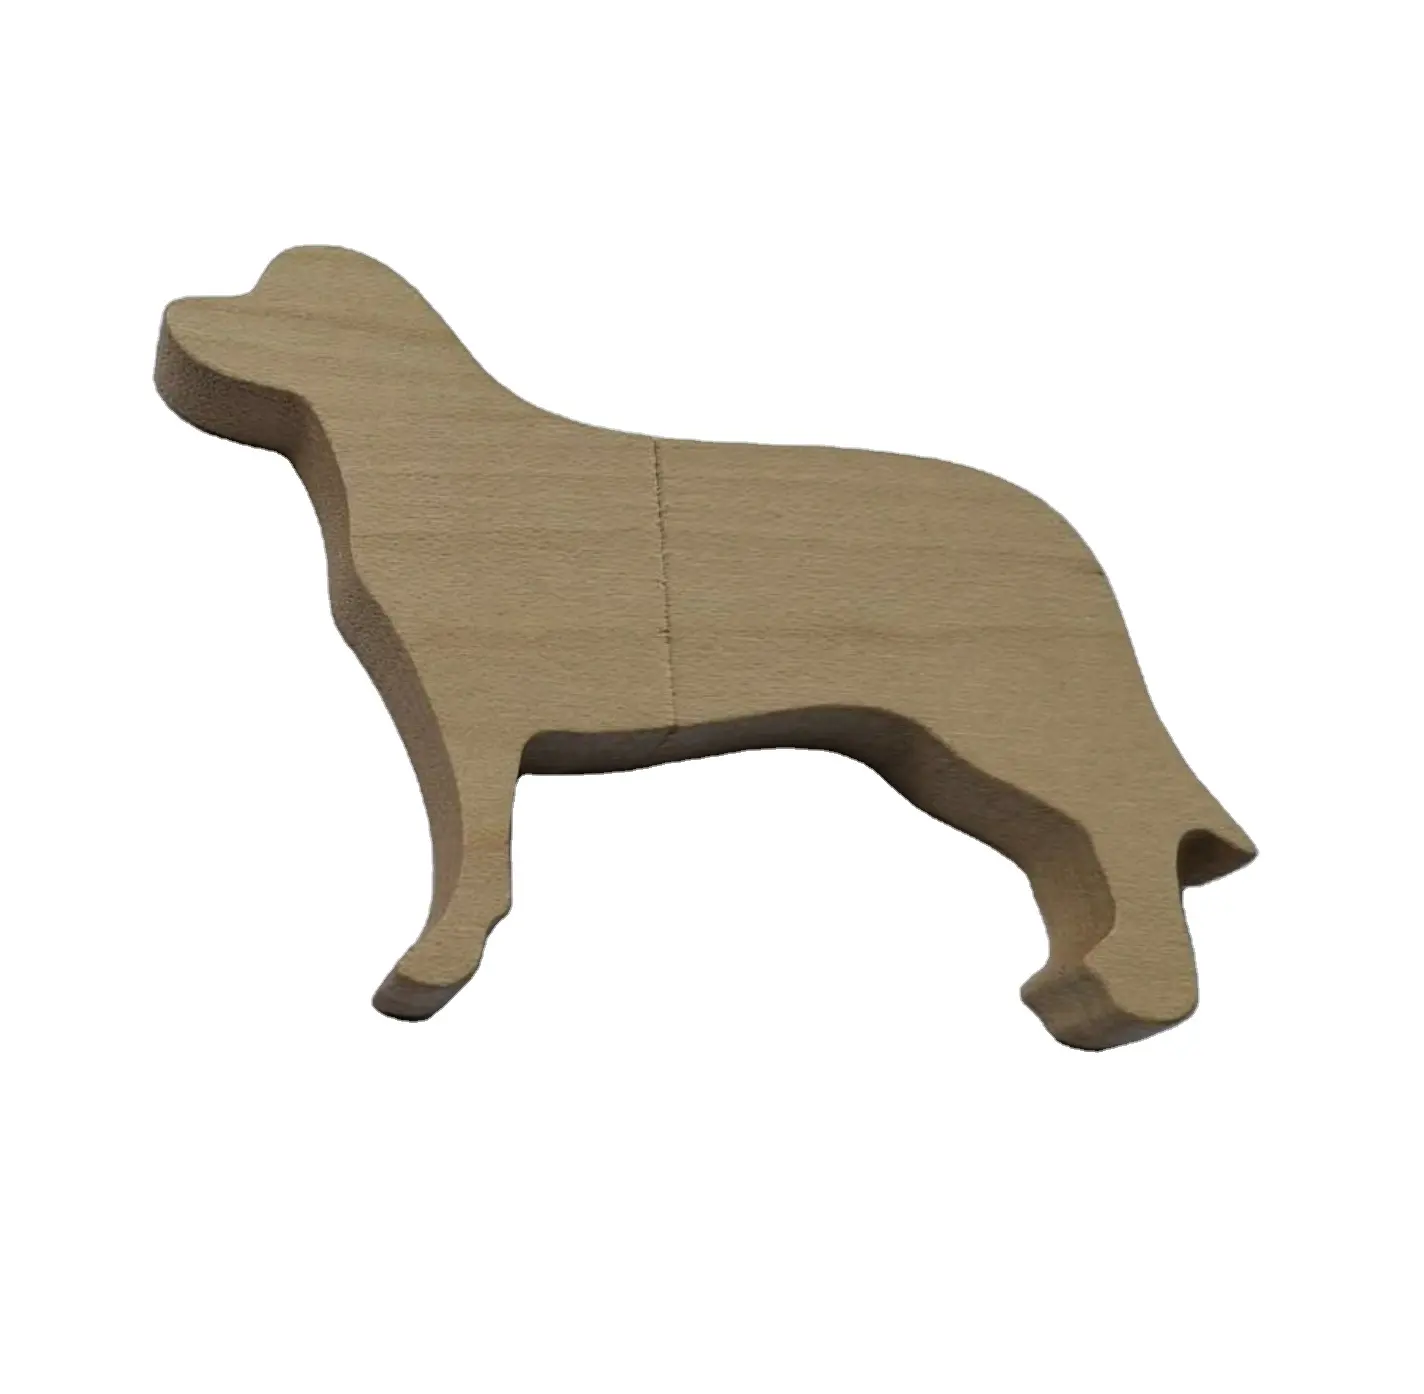 Regalo de la novedad Perro de madera Forma de animal USB Memory Stick Thumb Drive 32GB 16GB 8GB Walnut Maple Wood Flash Drive y caja